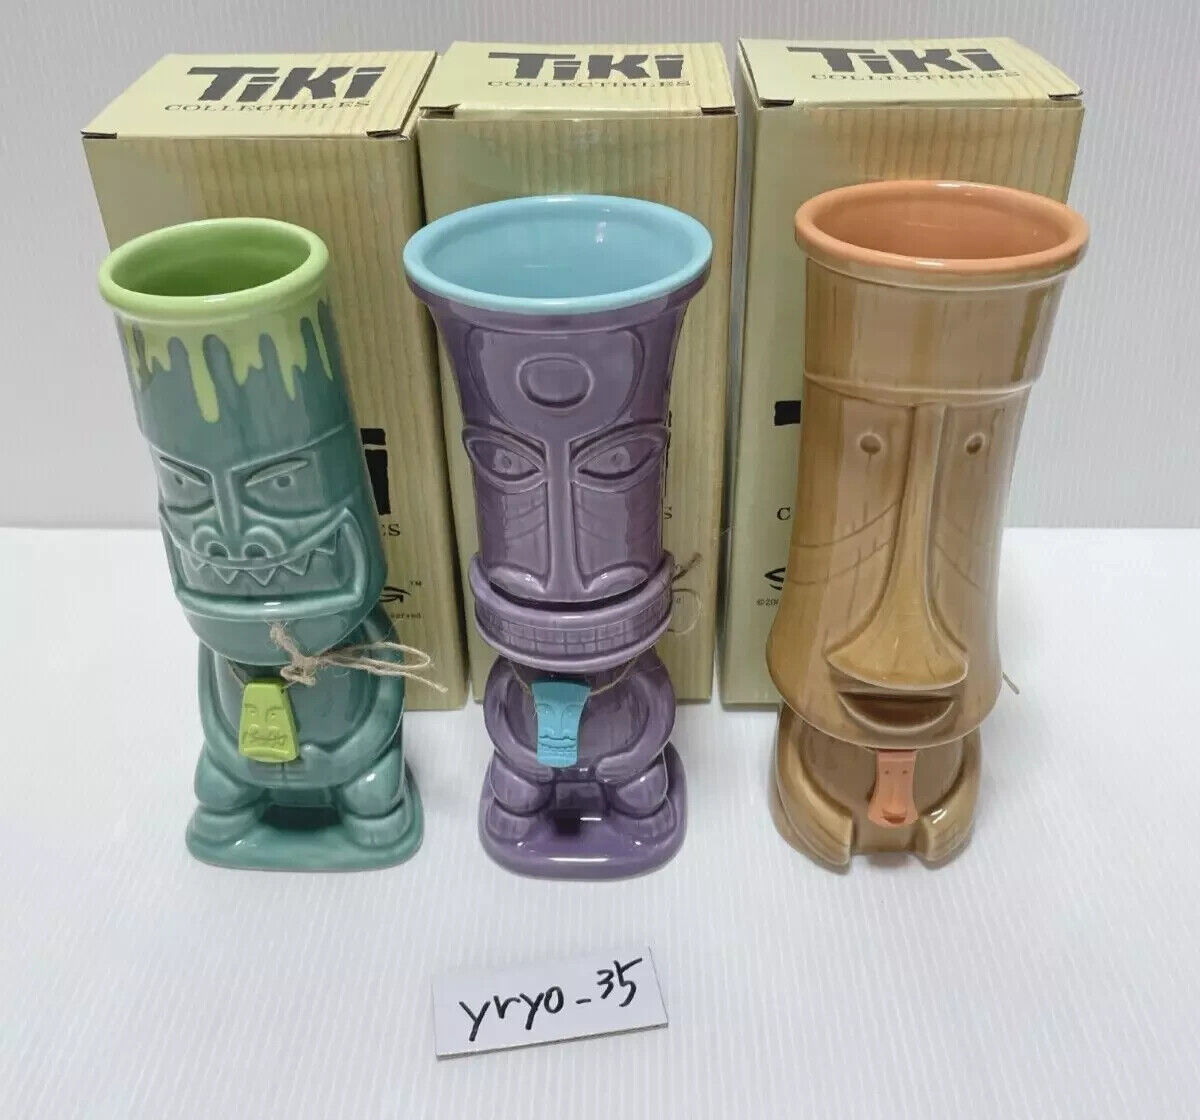 SHAG Josh Agle Mug Tumbler Tiki Collectibles by SHAG Set of 3 Rare 2006 Unused